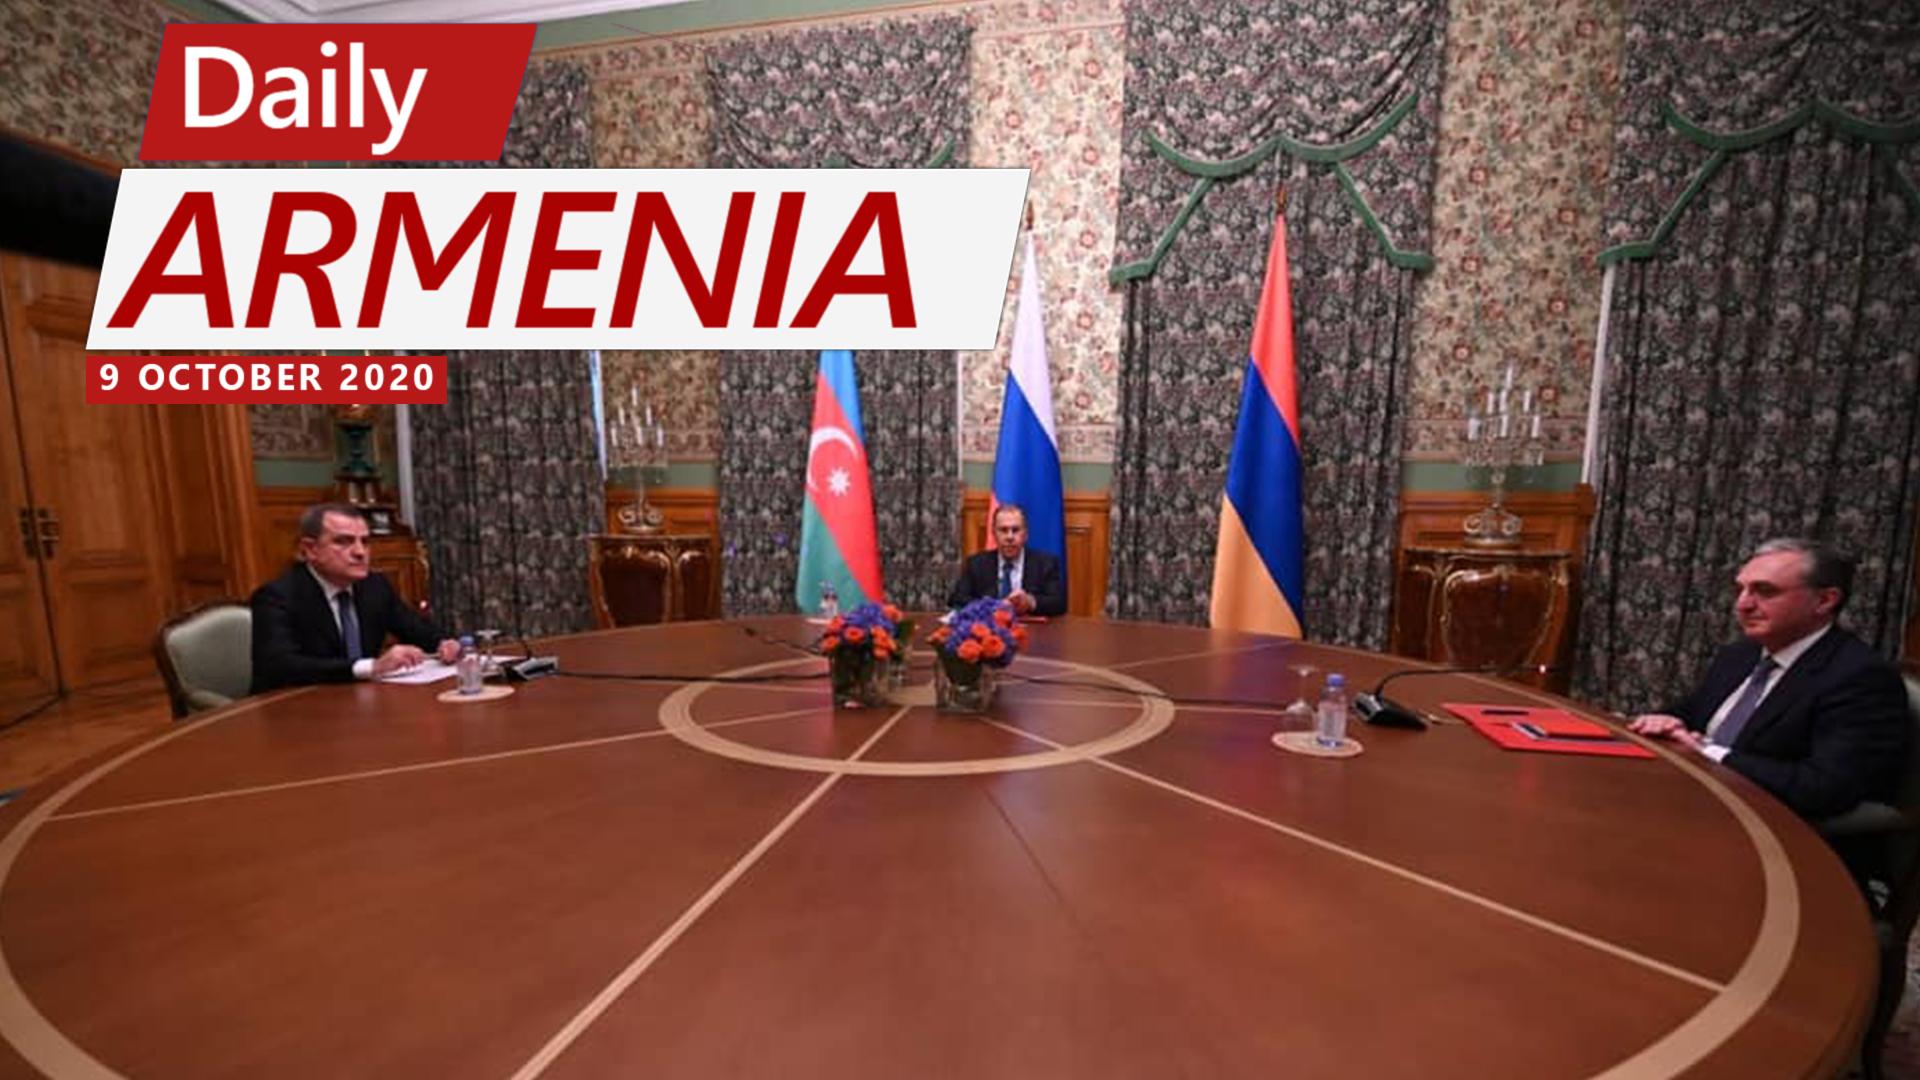 Nagorno-Karabakh: Day 13 of War, Talks Begin in Moscow